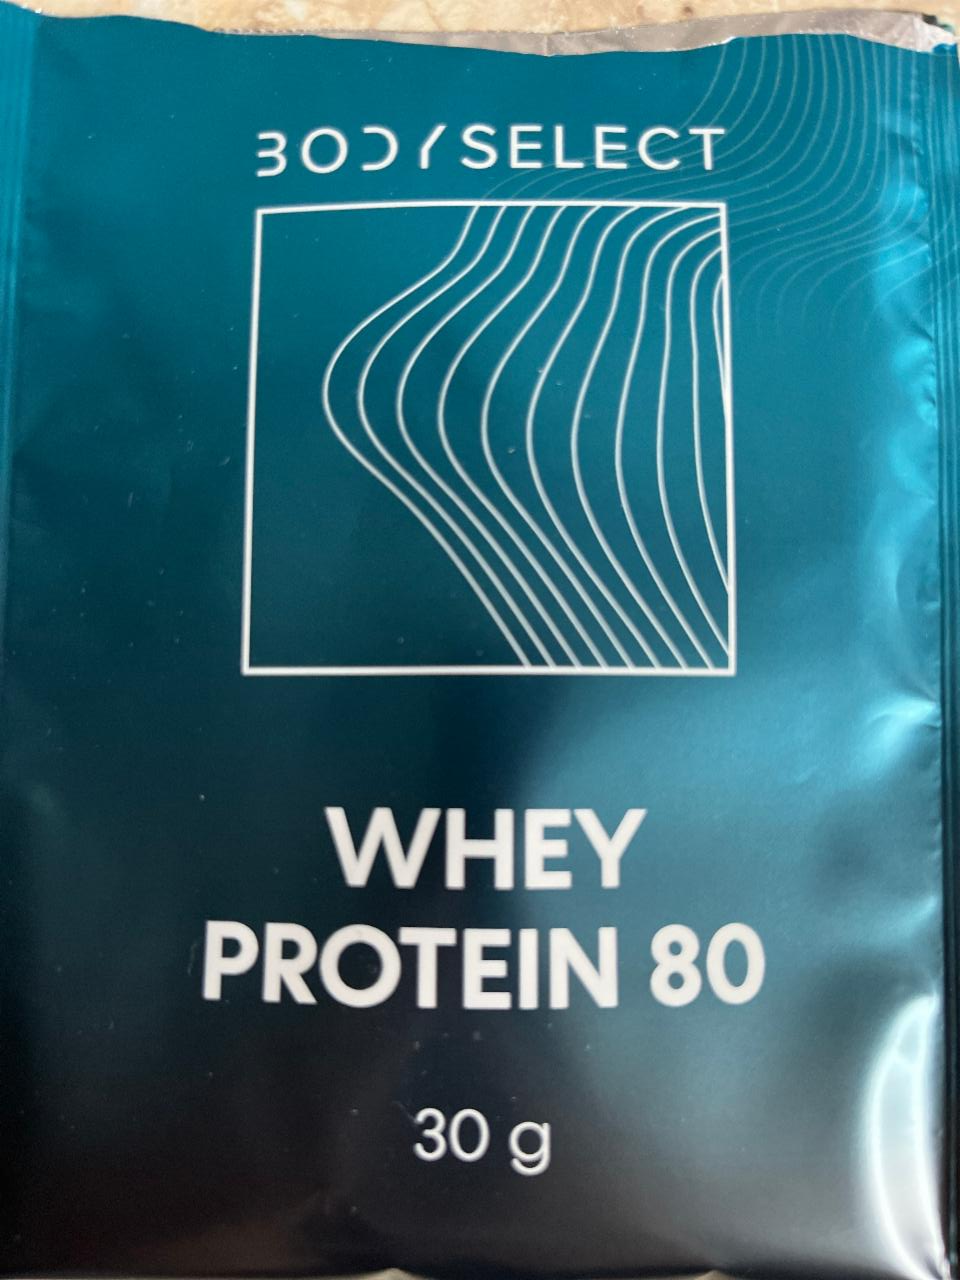 Képek - Whey protein 80 Sós karamell Body select